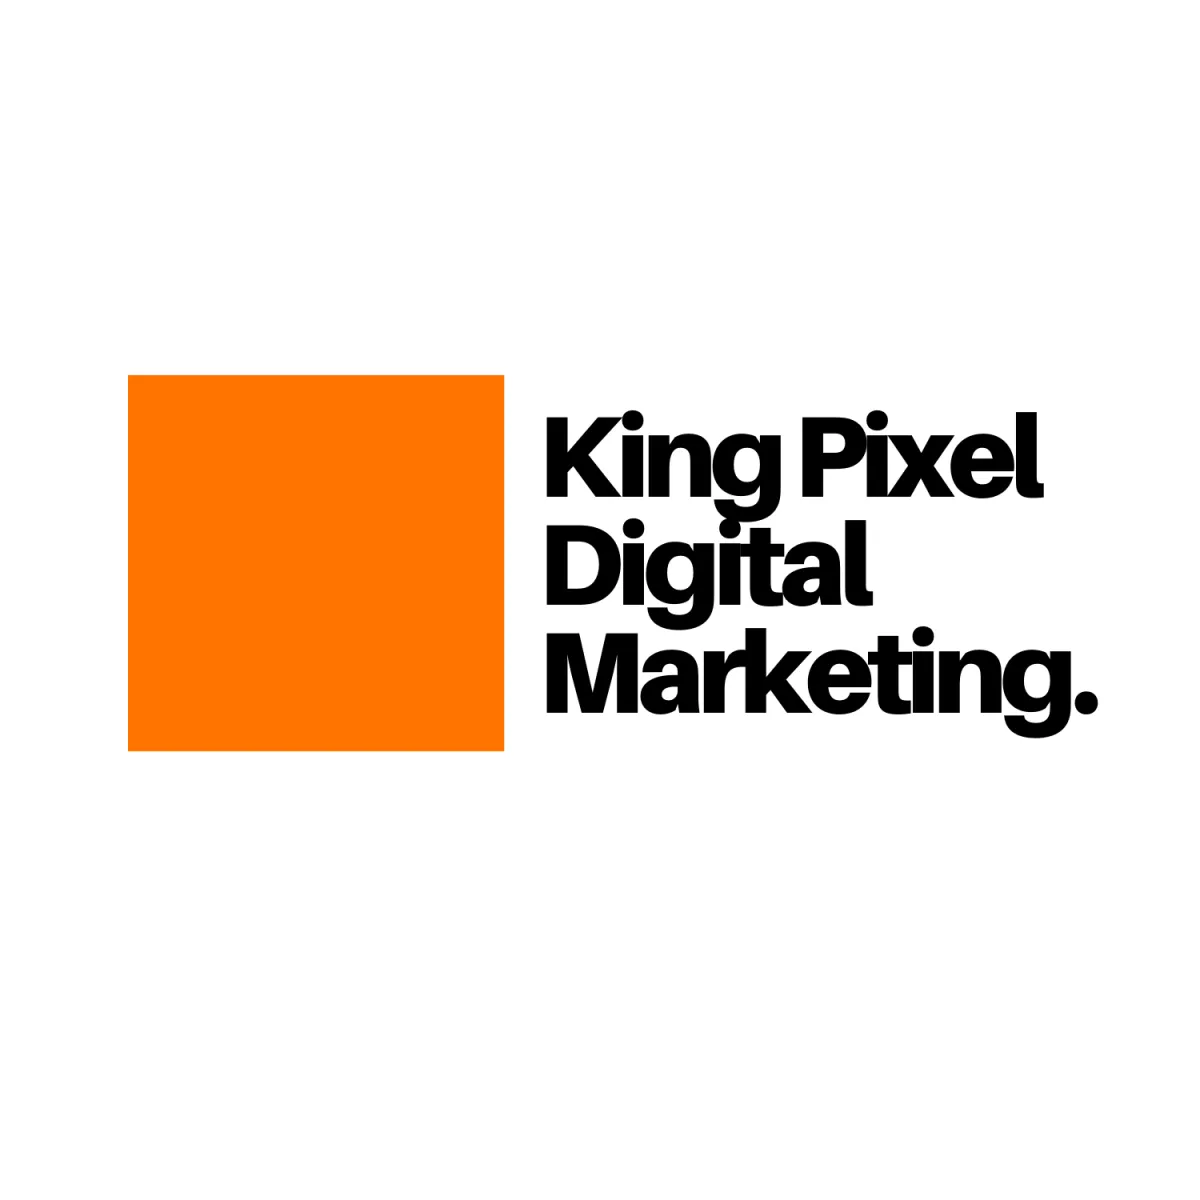 King Pixel Digital Marketing